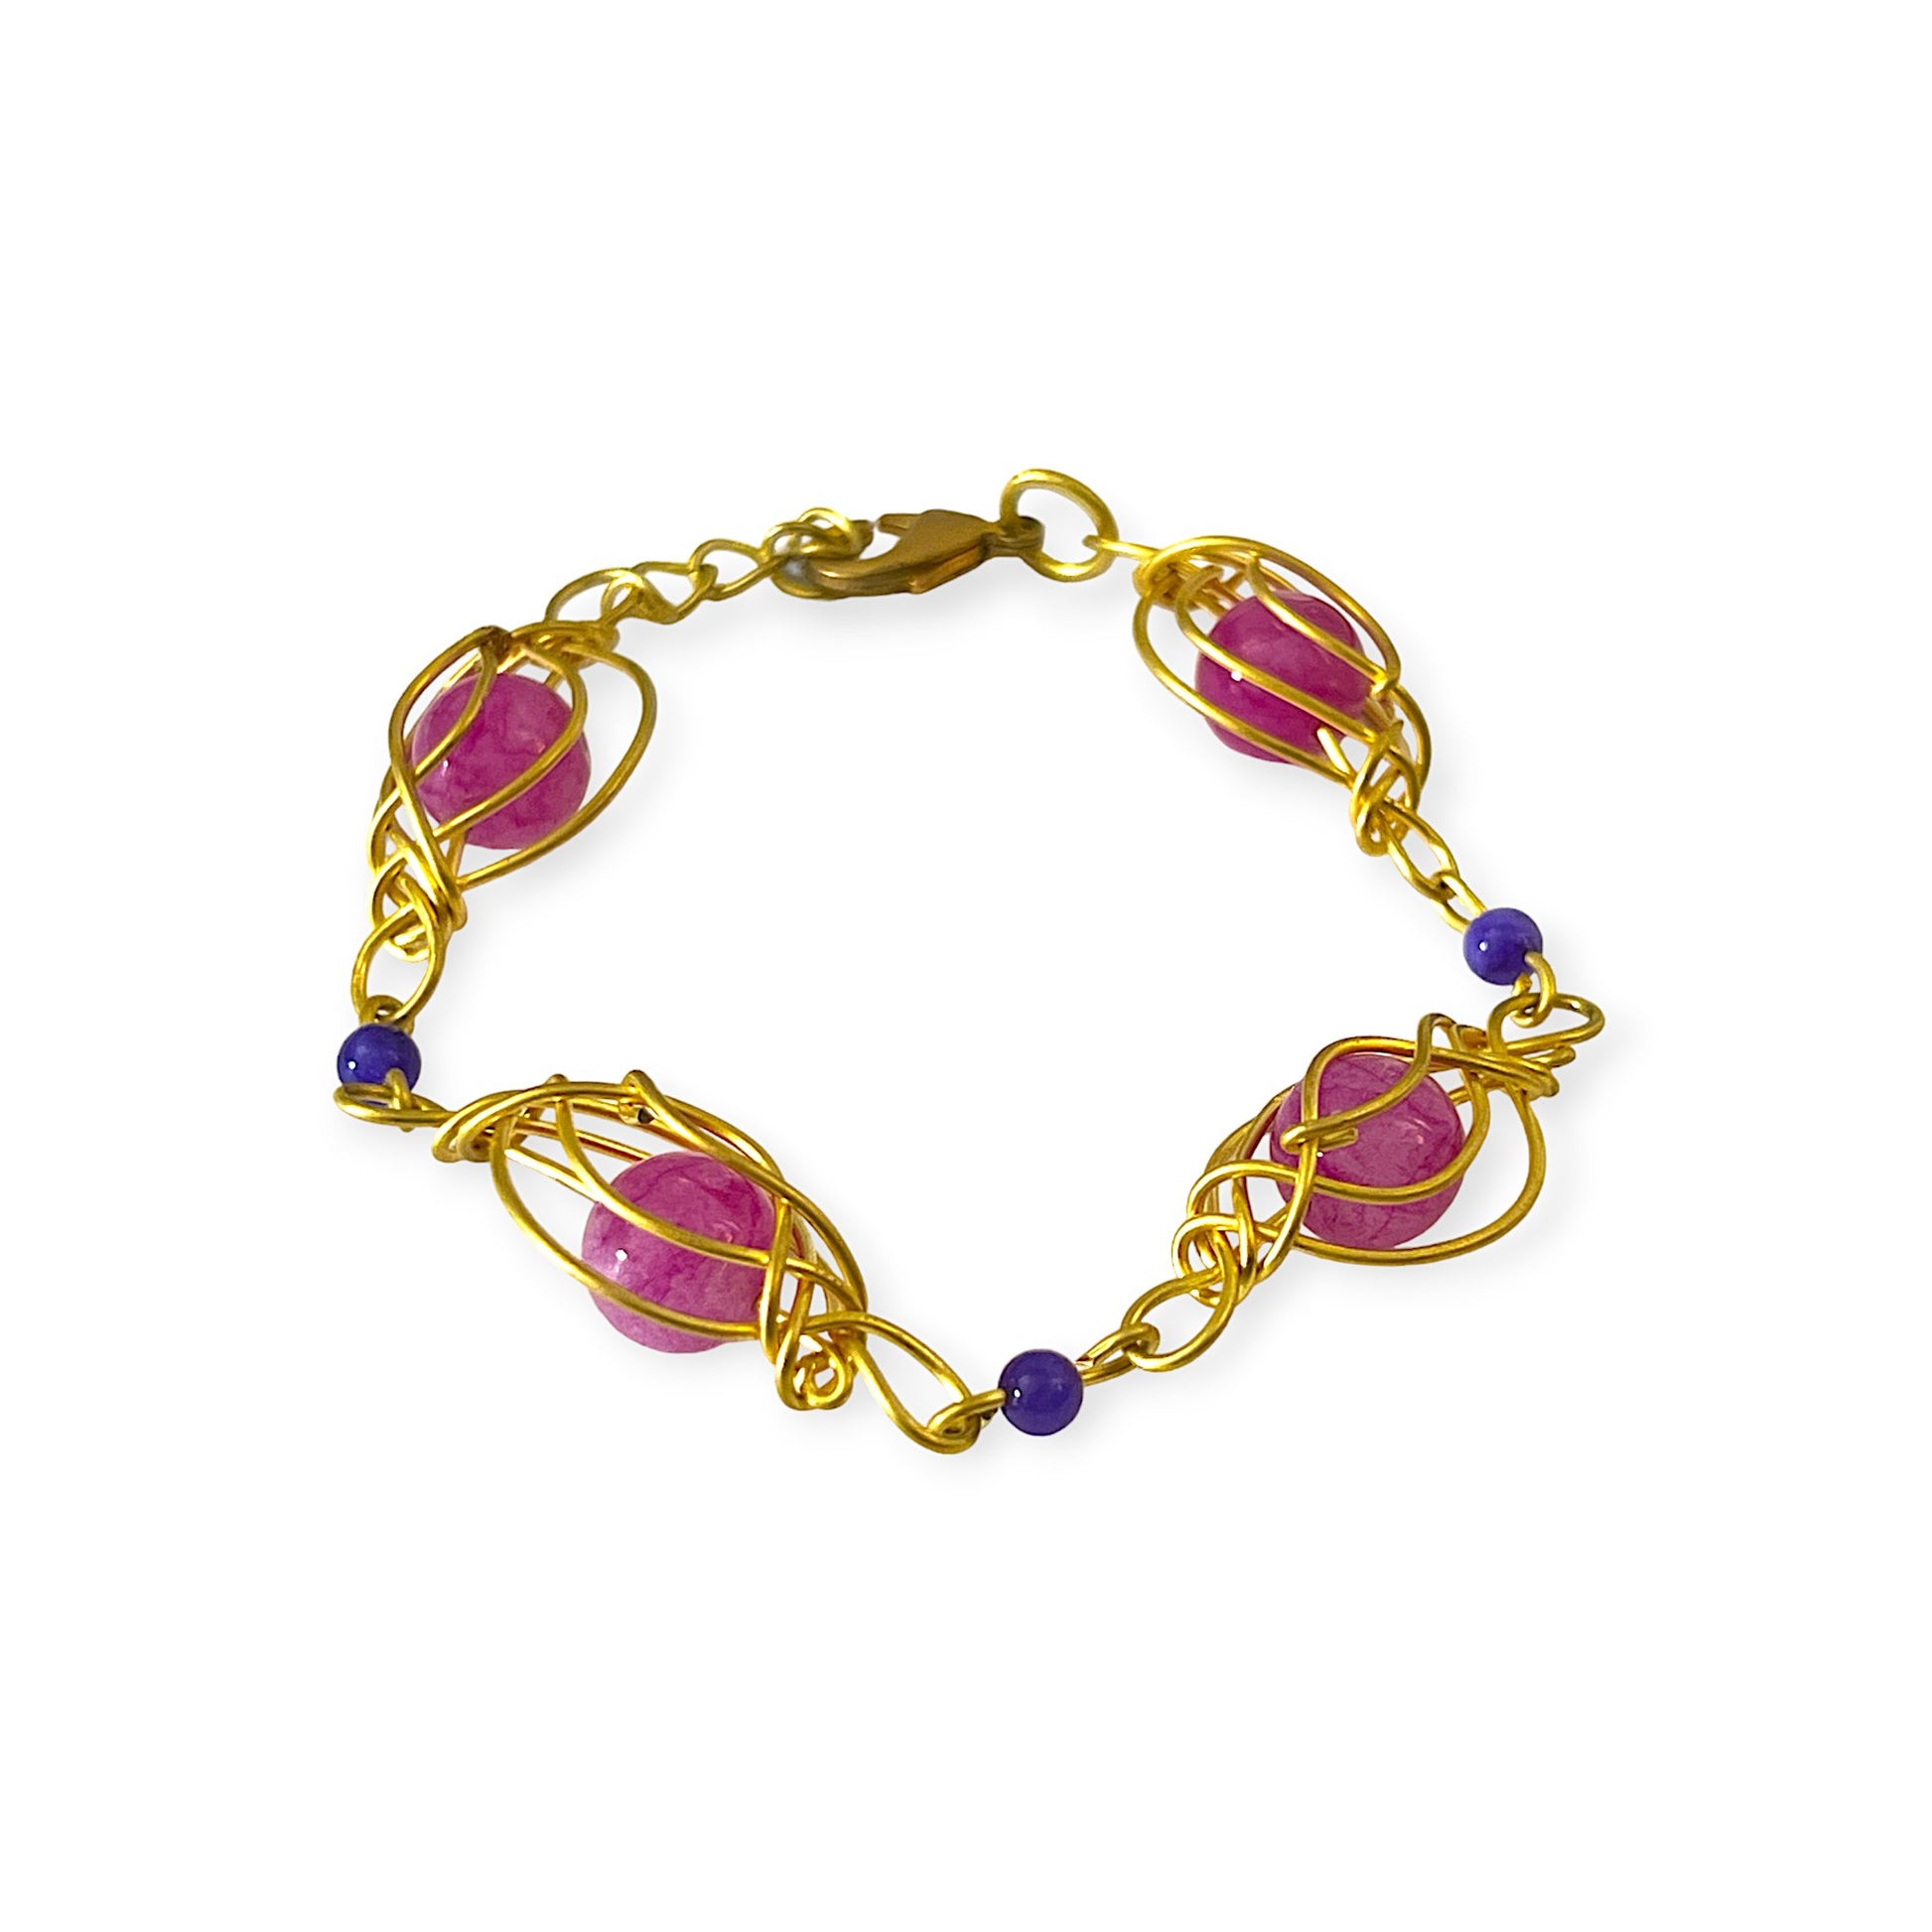 Colorful open weave chainlink bracelet - Sundara Joon